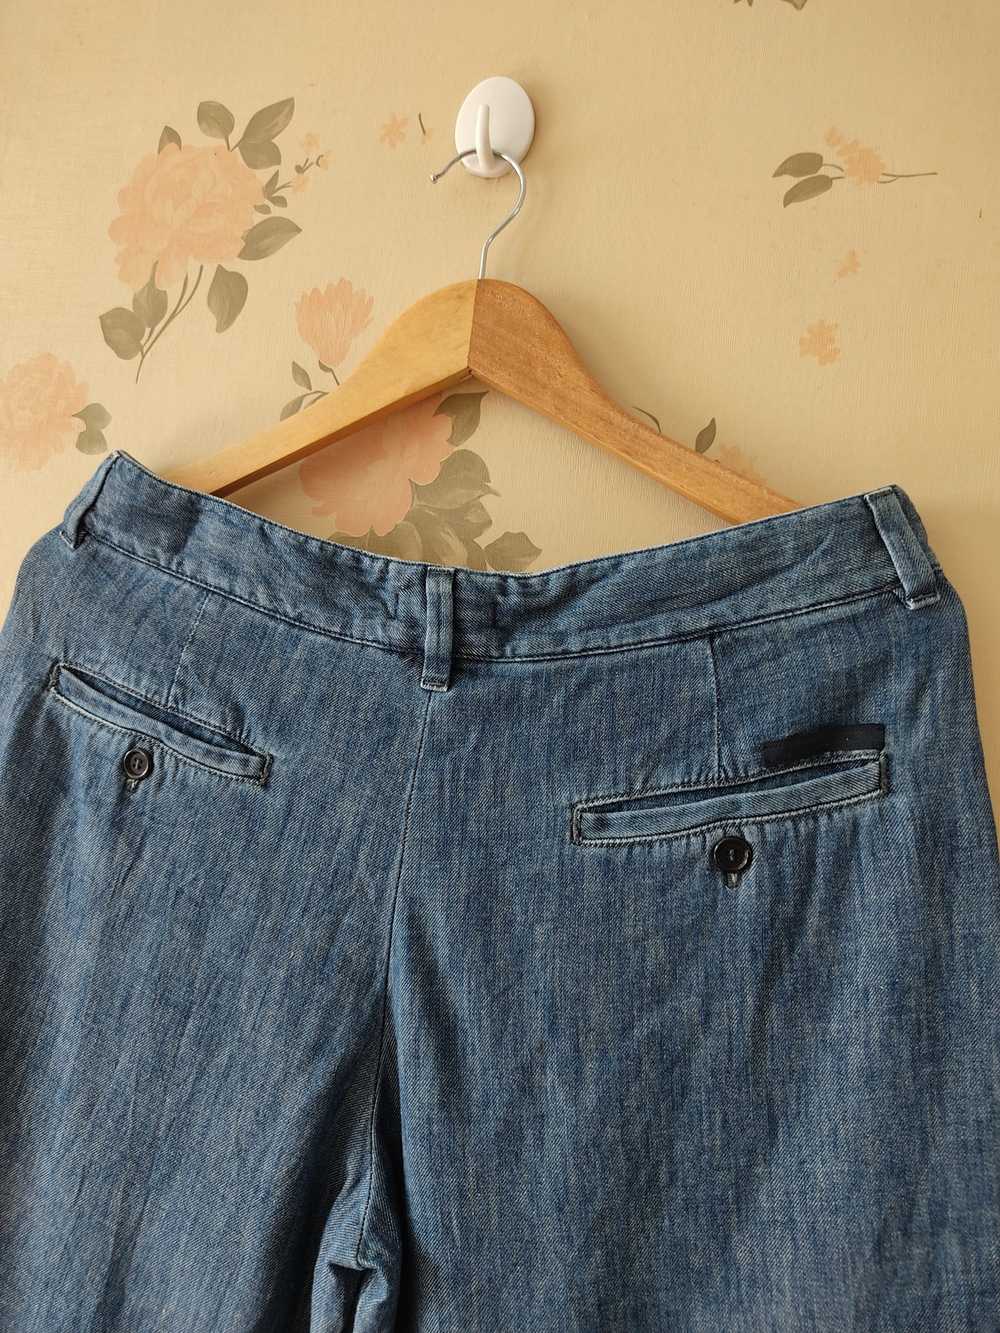 Prada × Vintage VINTAGE PRADA WOMEN'S JEANS PANTS - image 9